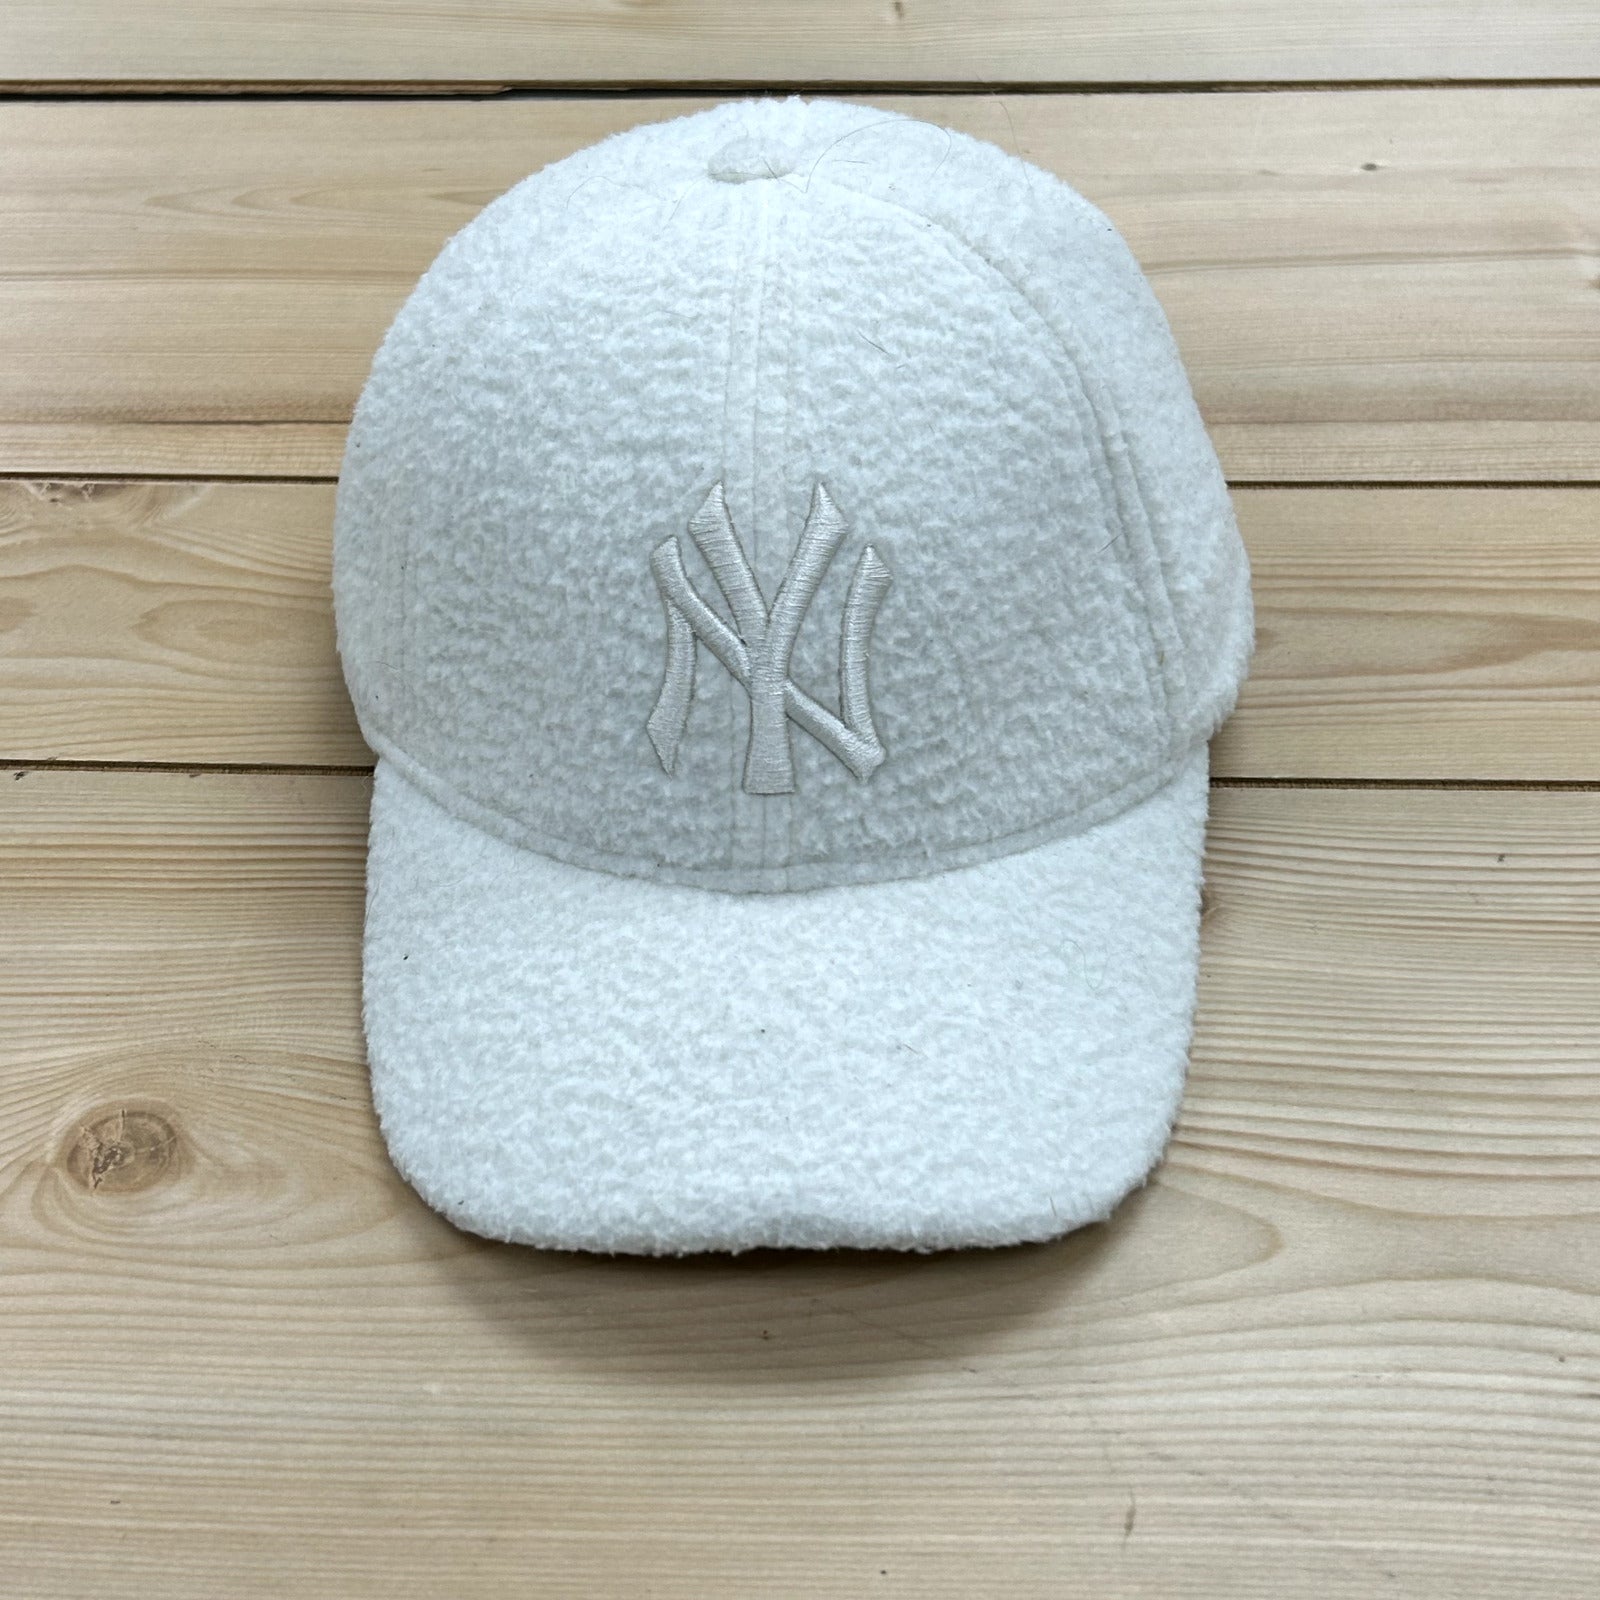 MLB Ivory New York Yankees Fuzzy Adjustable Hat Strap Baseball Cap Sherpa Like